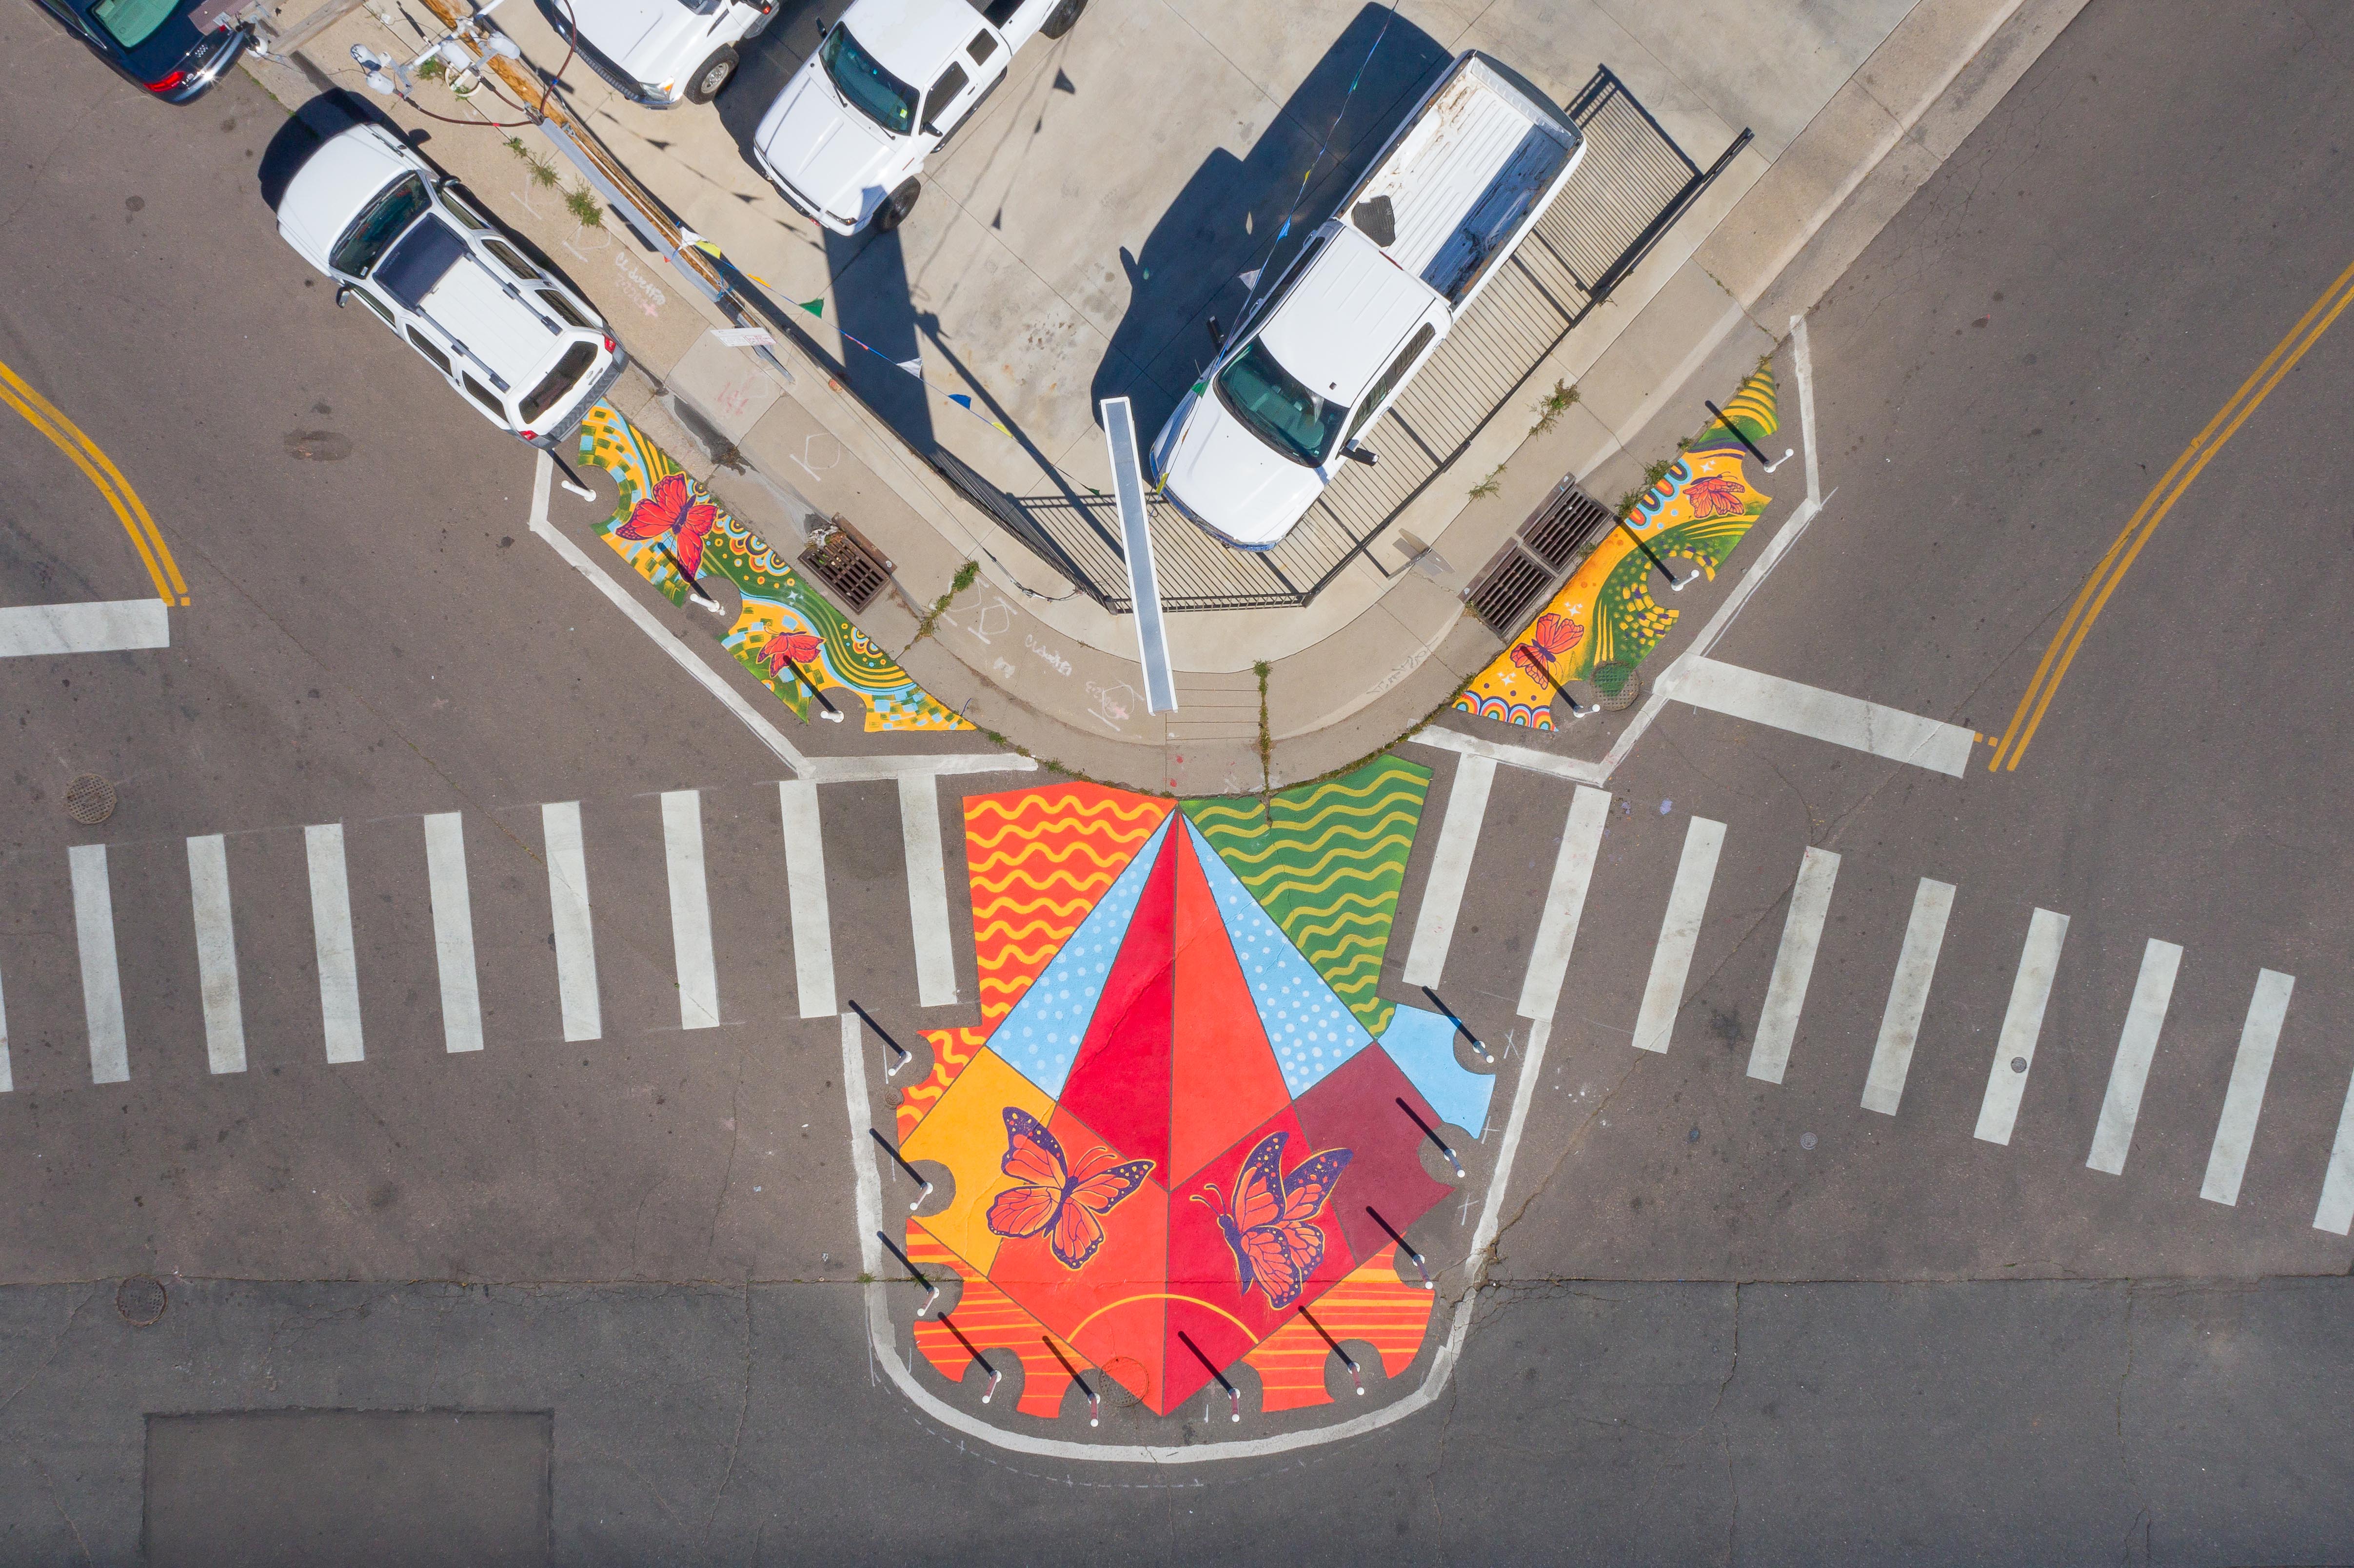 Denver, Colorado Asphalt Art Initiative Drone After shoot